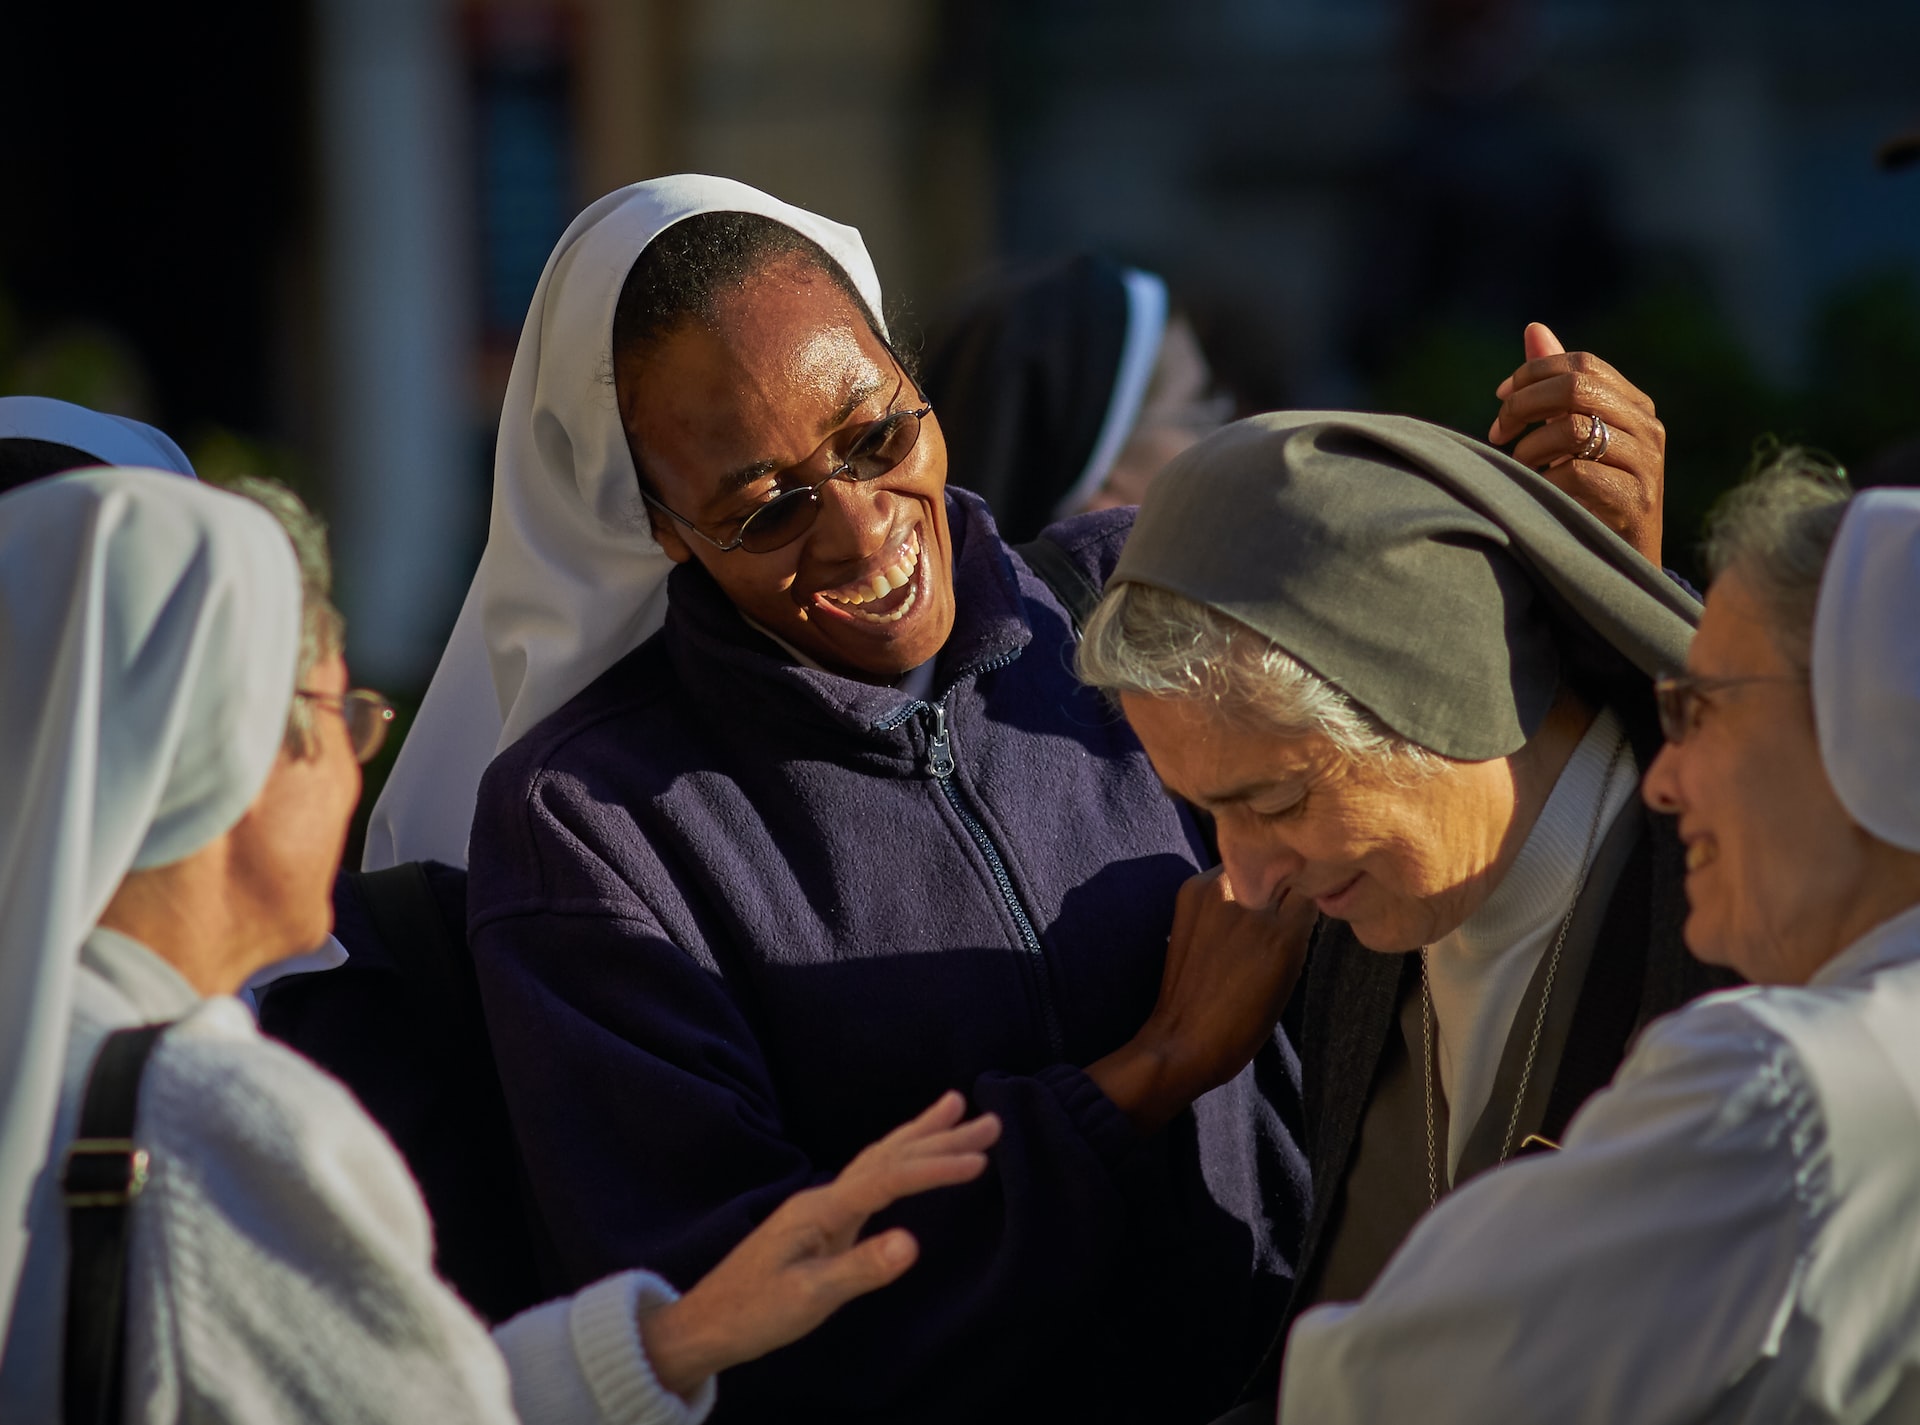 Four Catholics Nuns Are Now Free - Imo Police Says